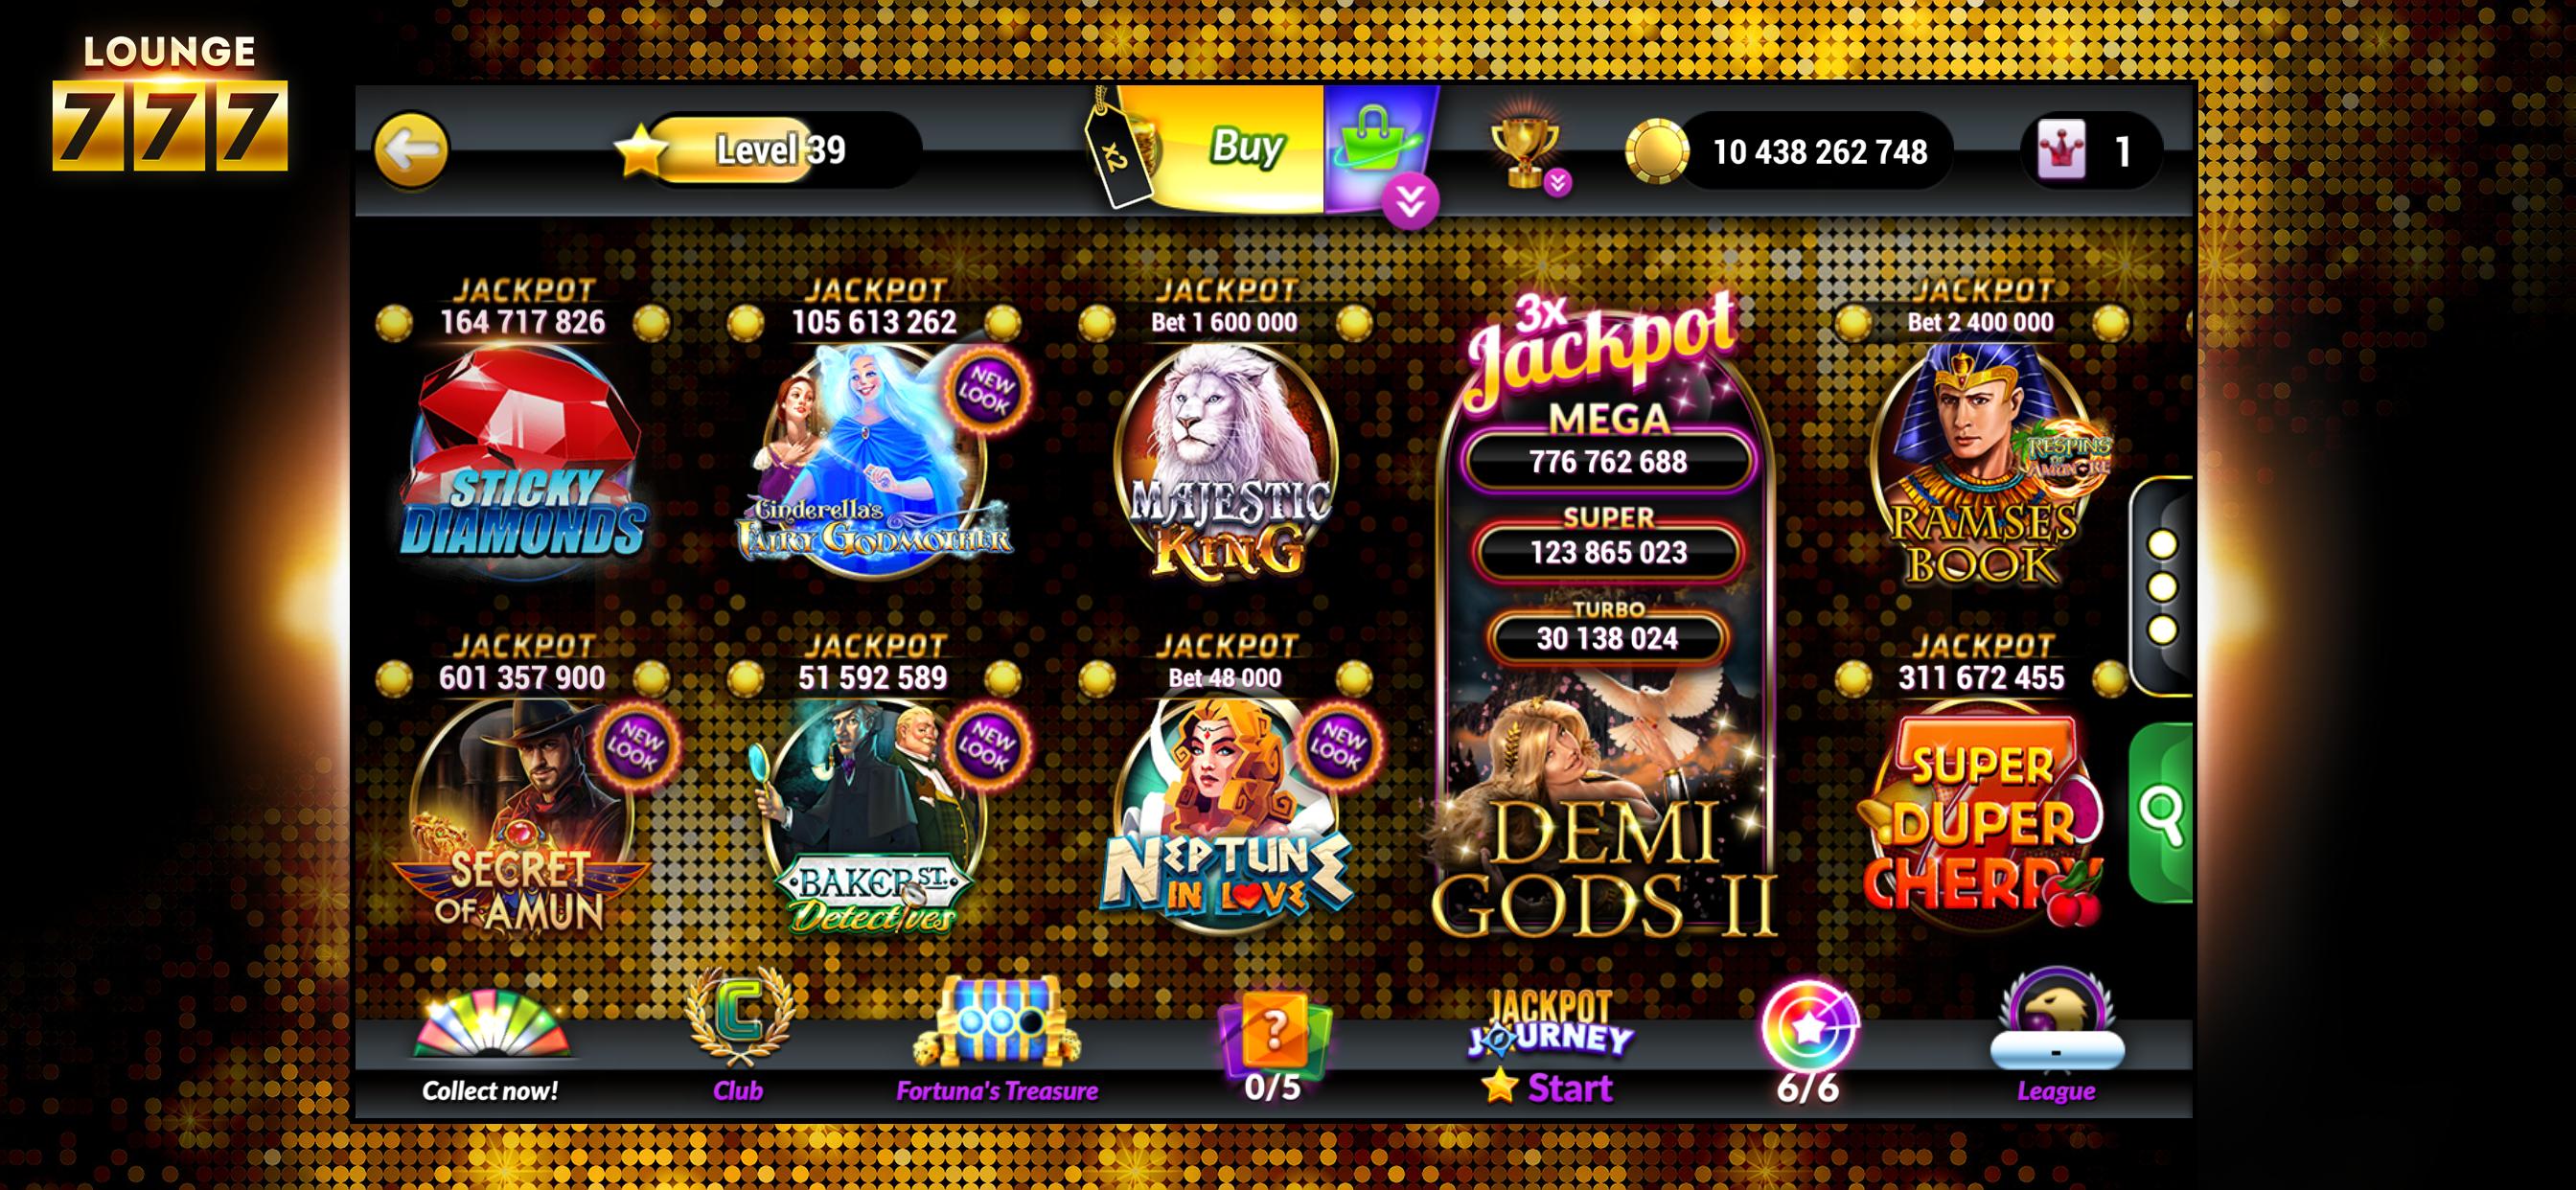 Lounge777 Online Casino 4.11.46 Screenshot 1